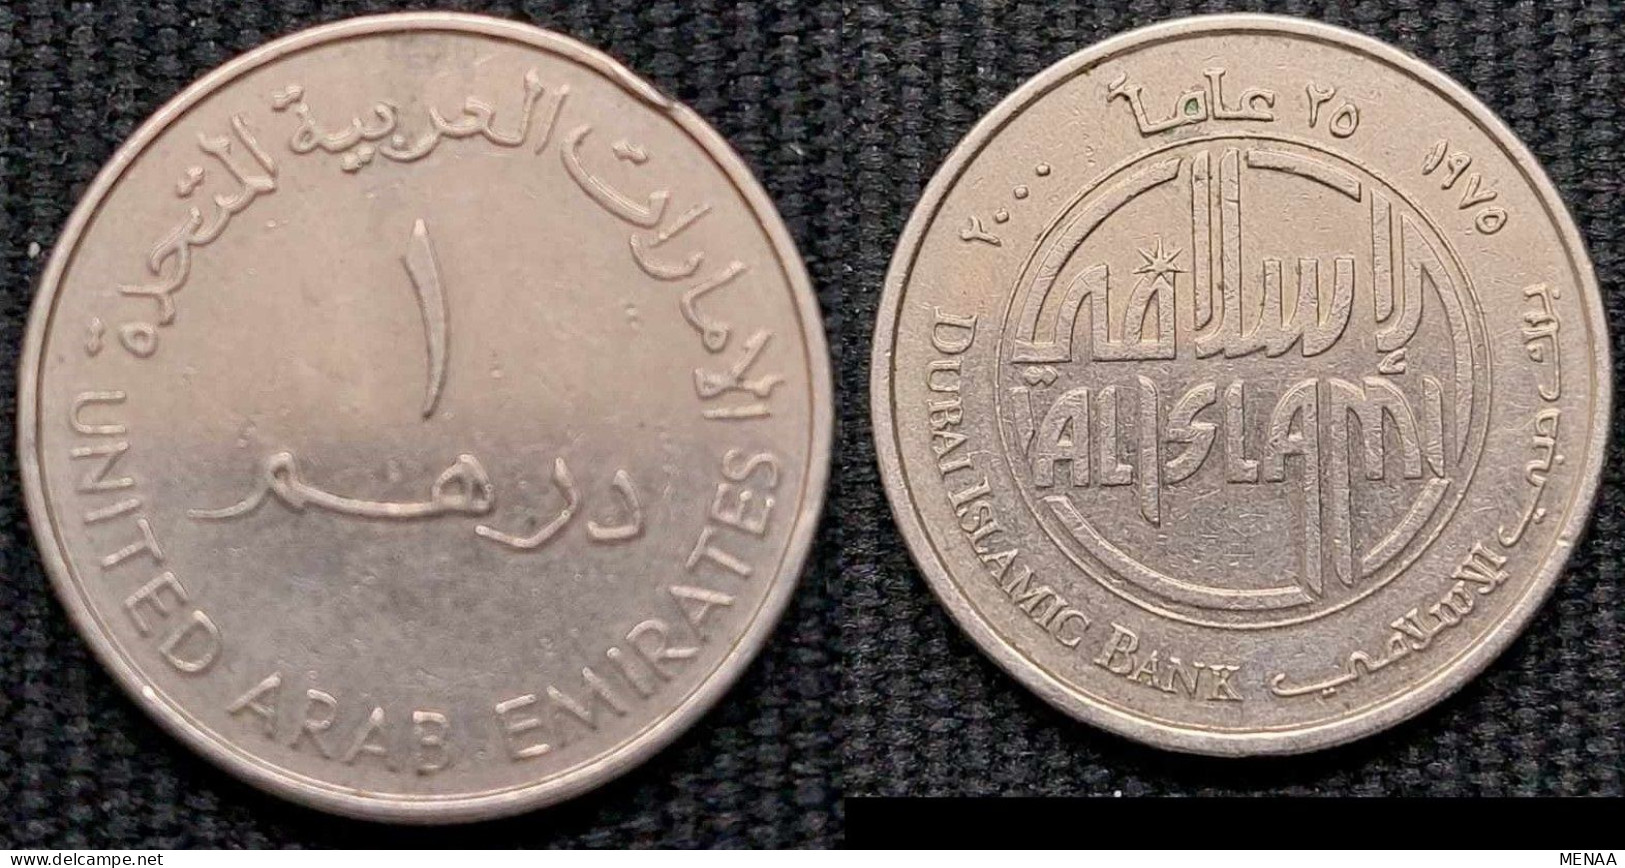 United Arab Emirates -1 Dirham -2000-The Silver Jubilee Of Dubai Islamic Bank - KM 43 - Verenigde Arabische Emiraten